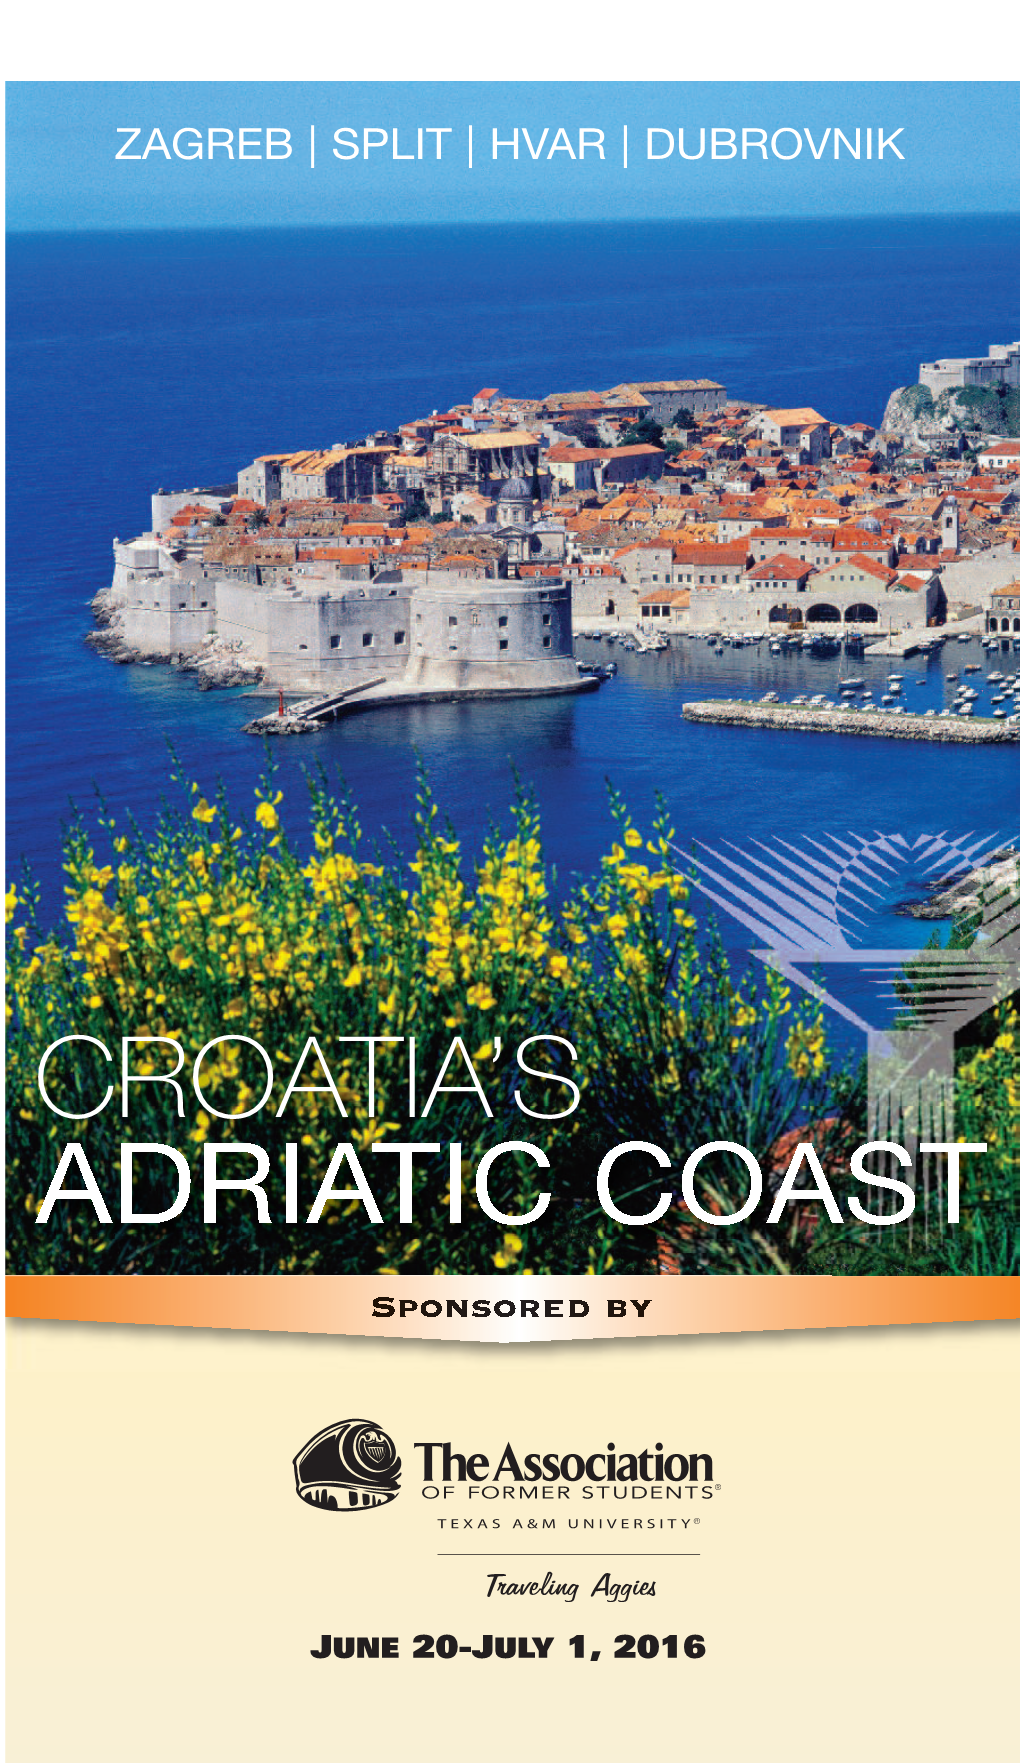 Adriatic Coast CROATIA's